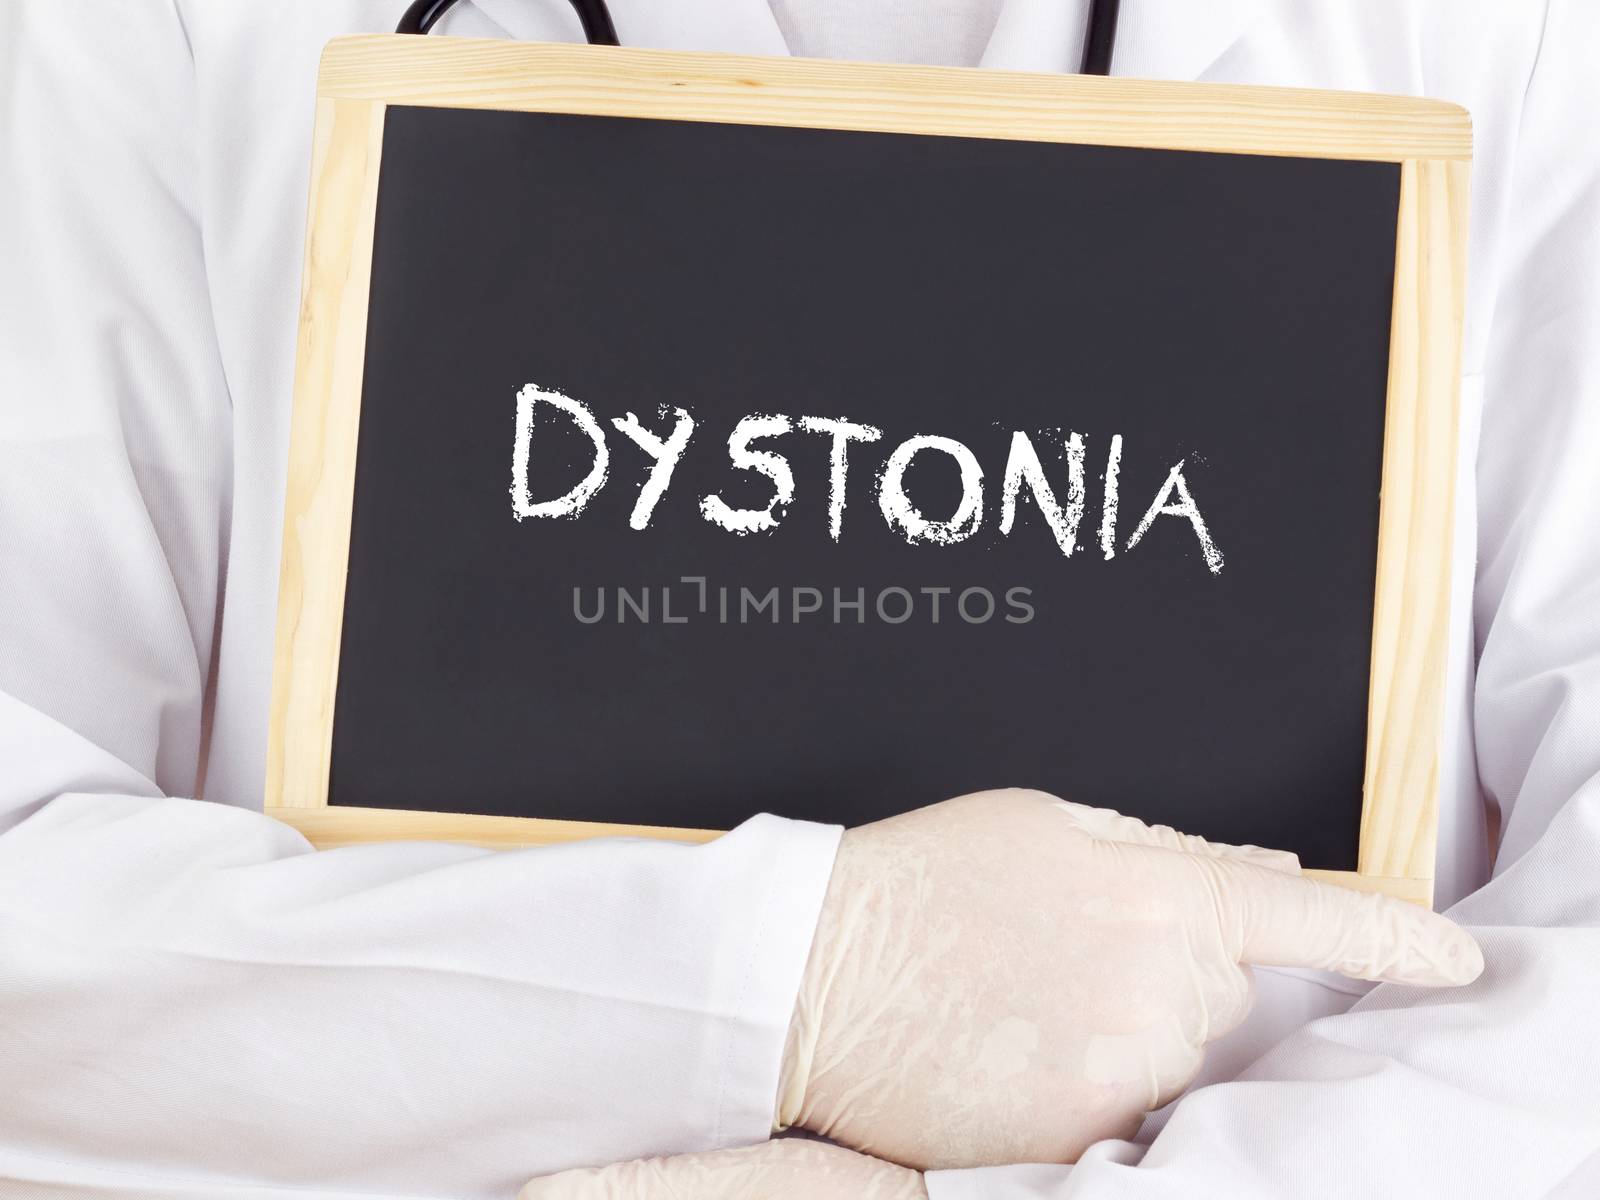 Doctor shows information on blackboard: Dystonia